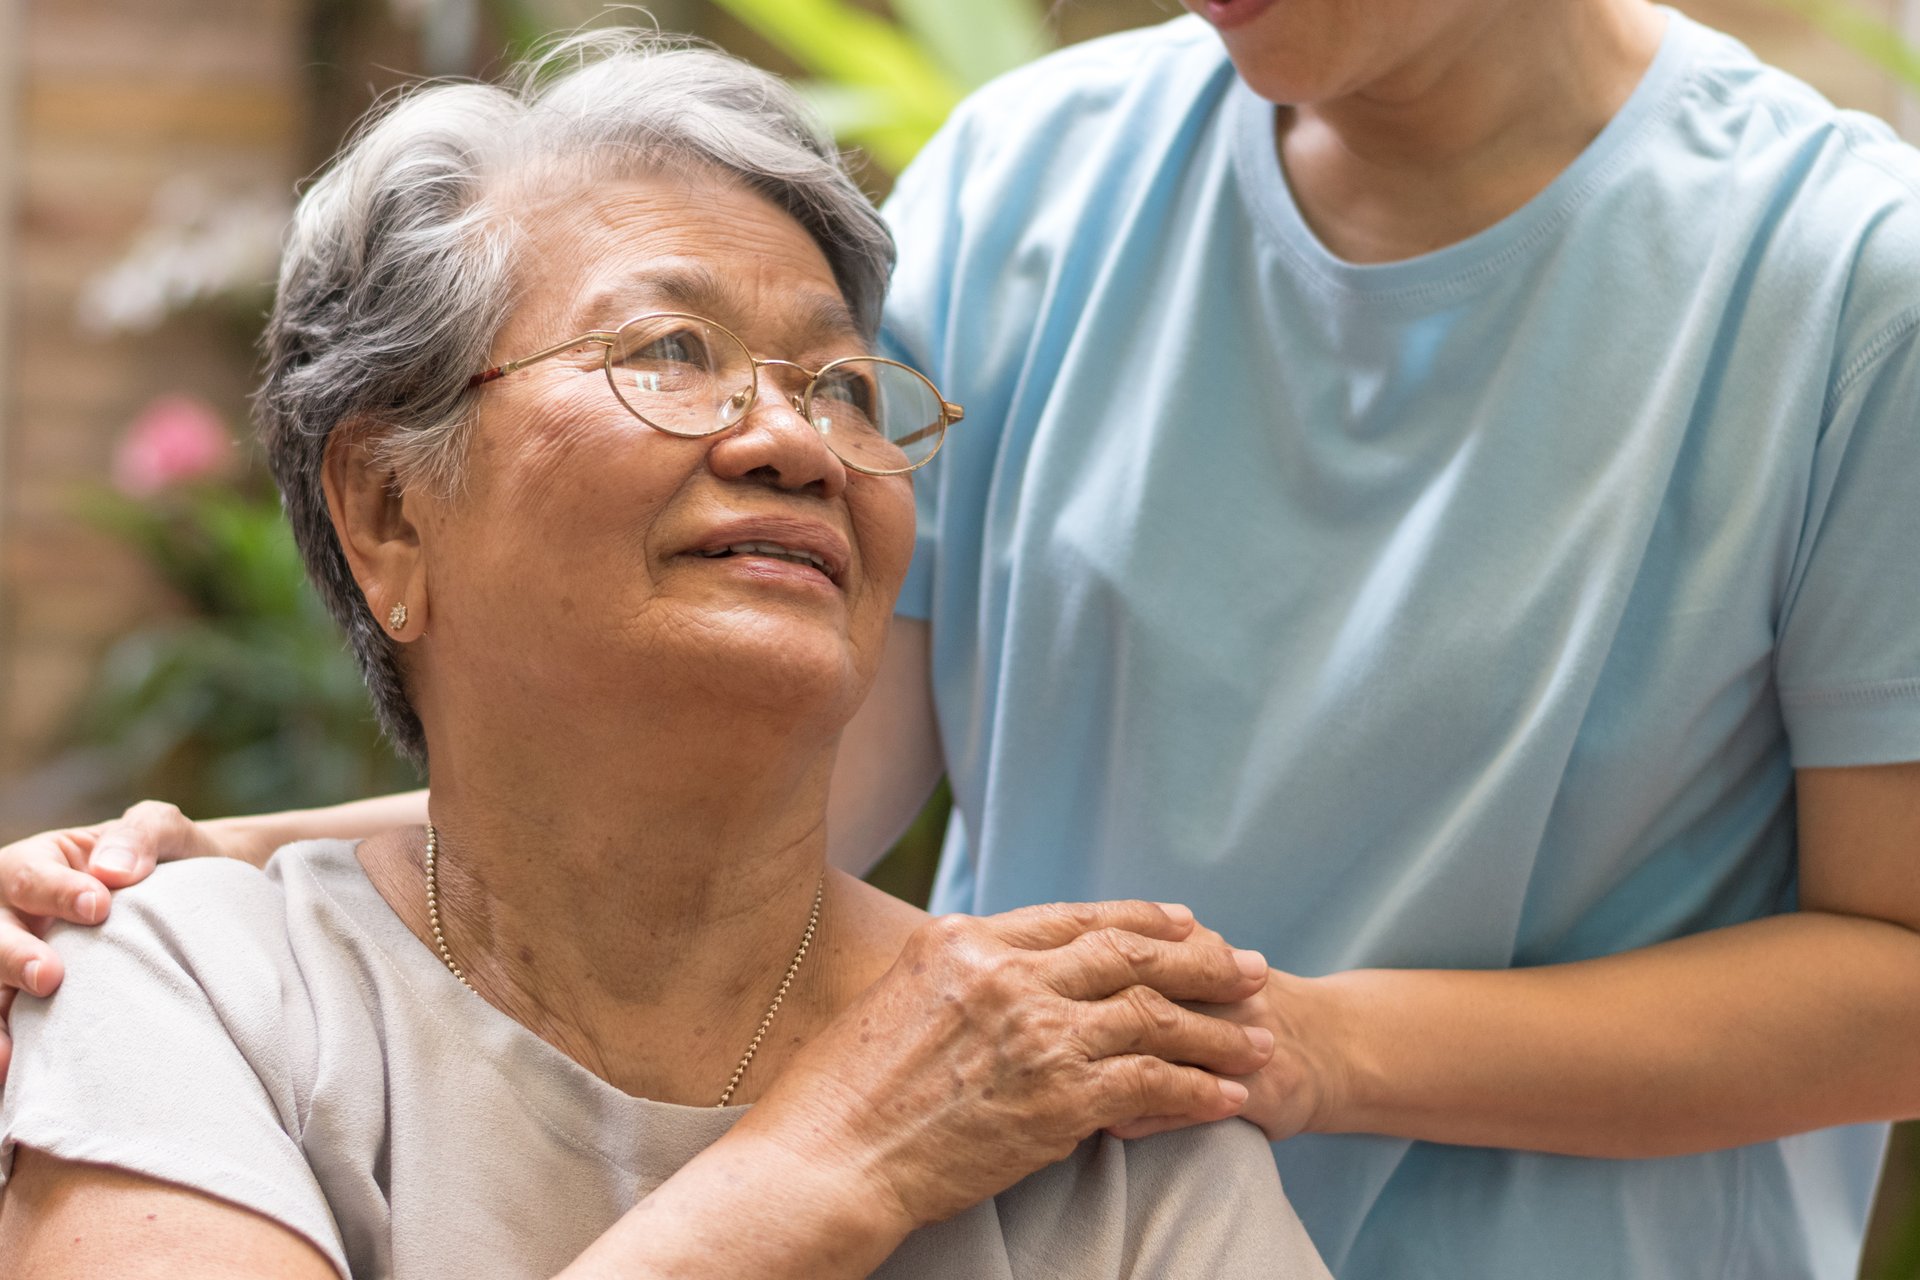 A senior patient receives health care